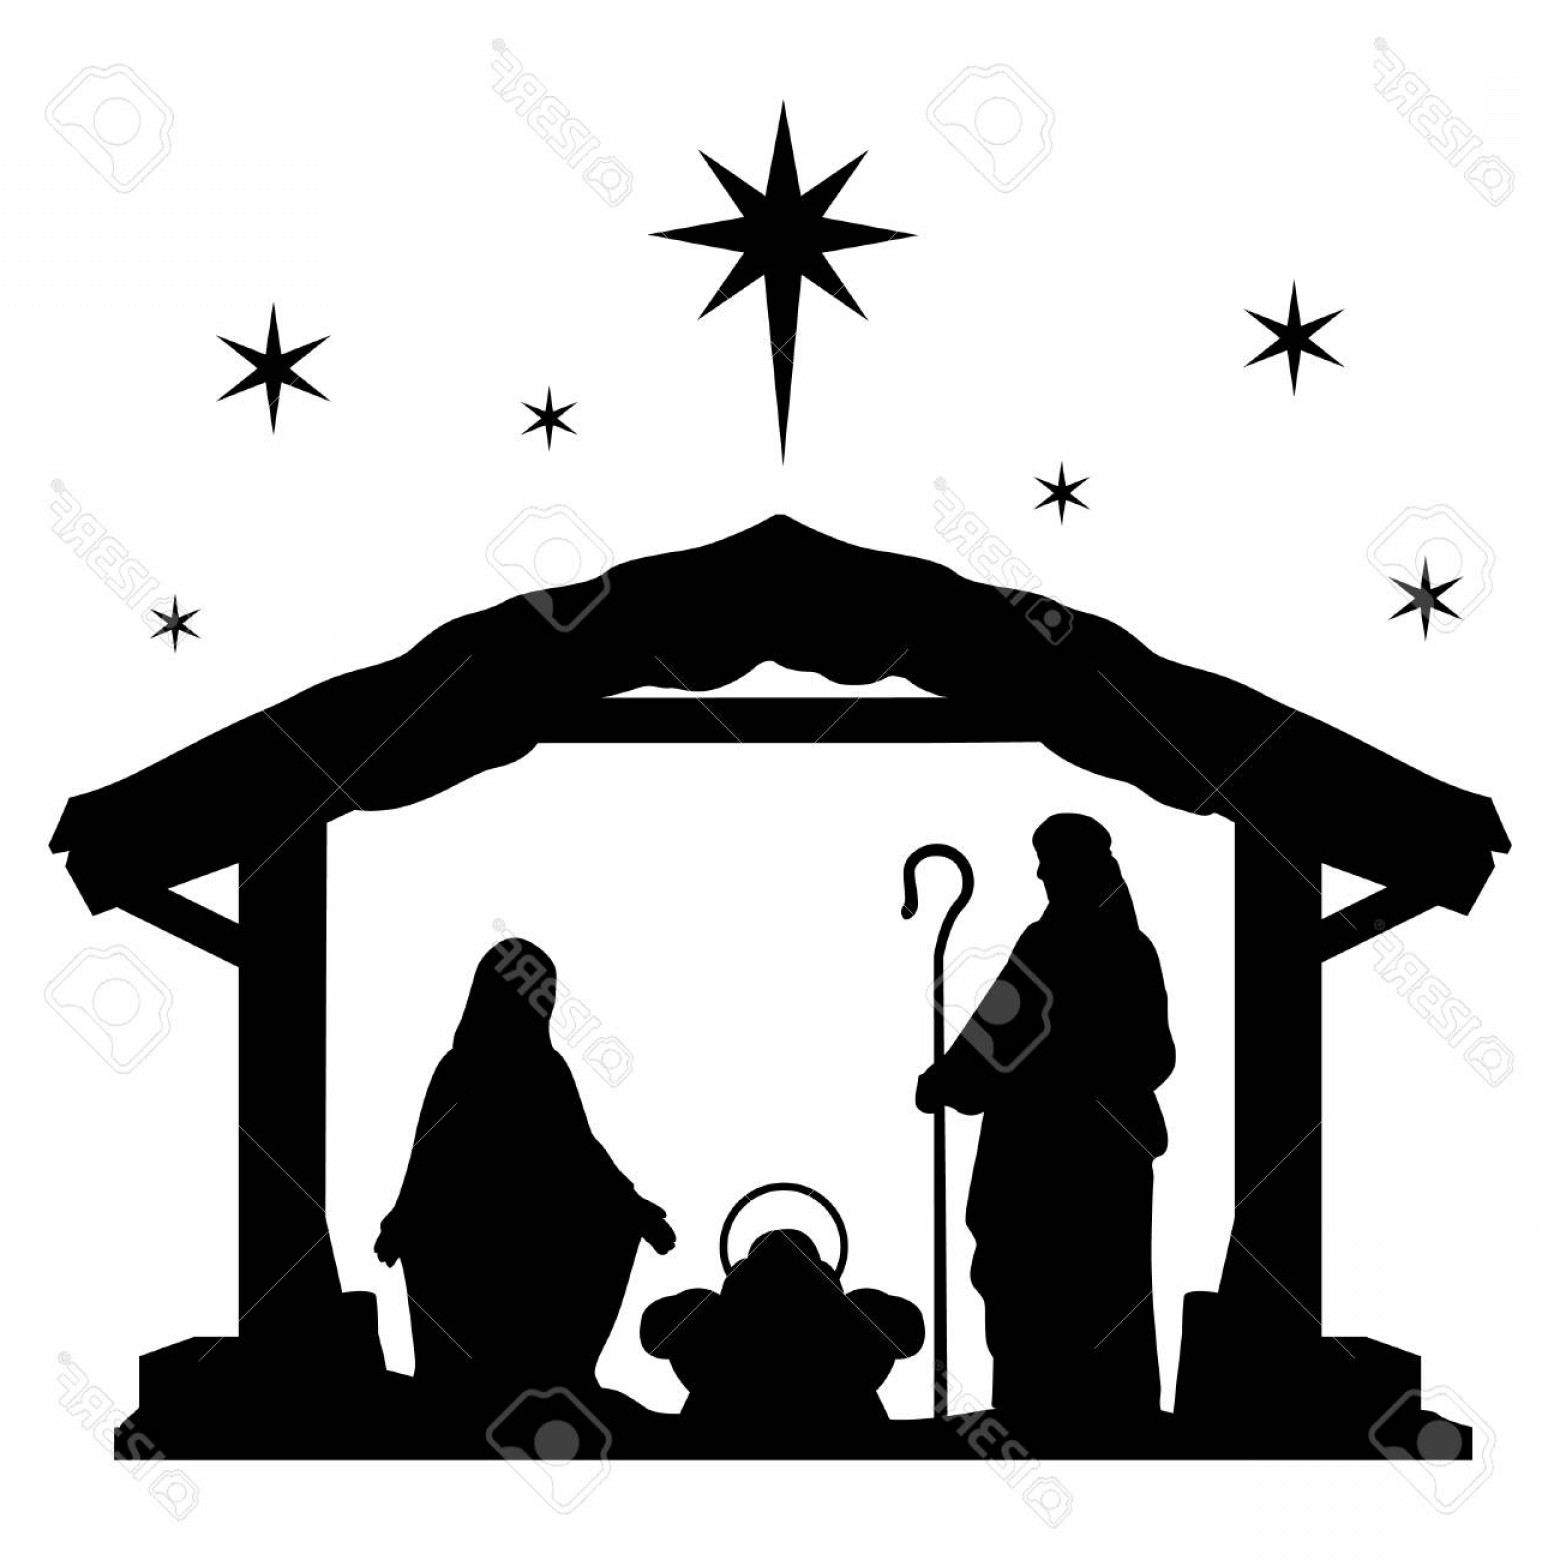 Christmas nativity vector.